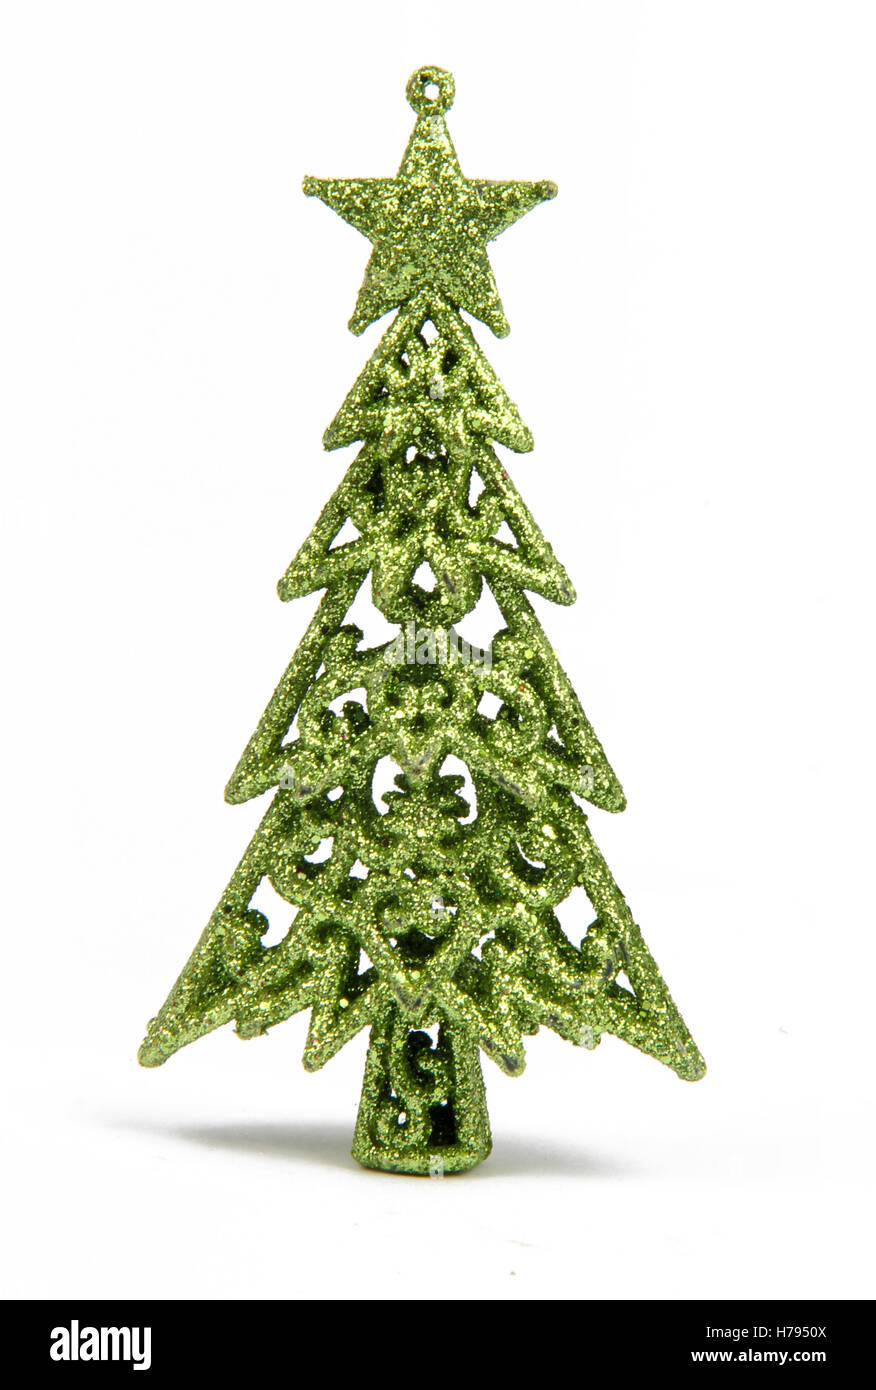 Green Christmas Tree Christmas Decoration Isolated on White Stock Photo